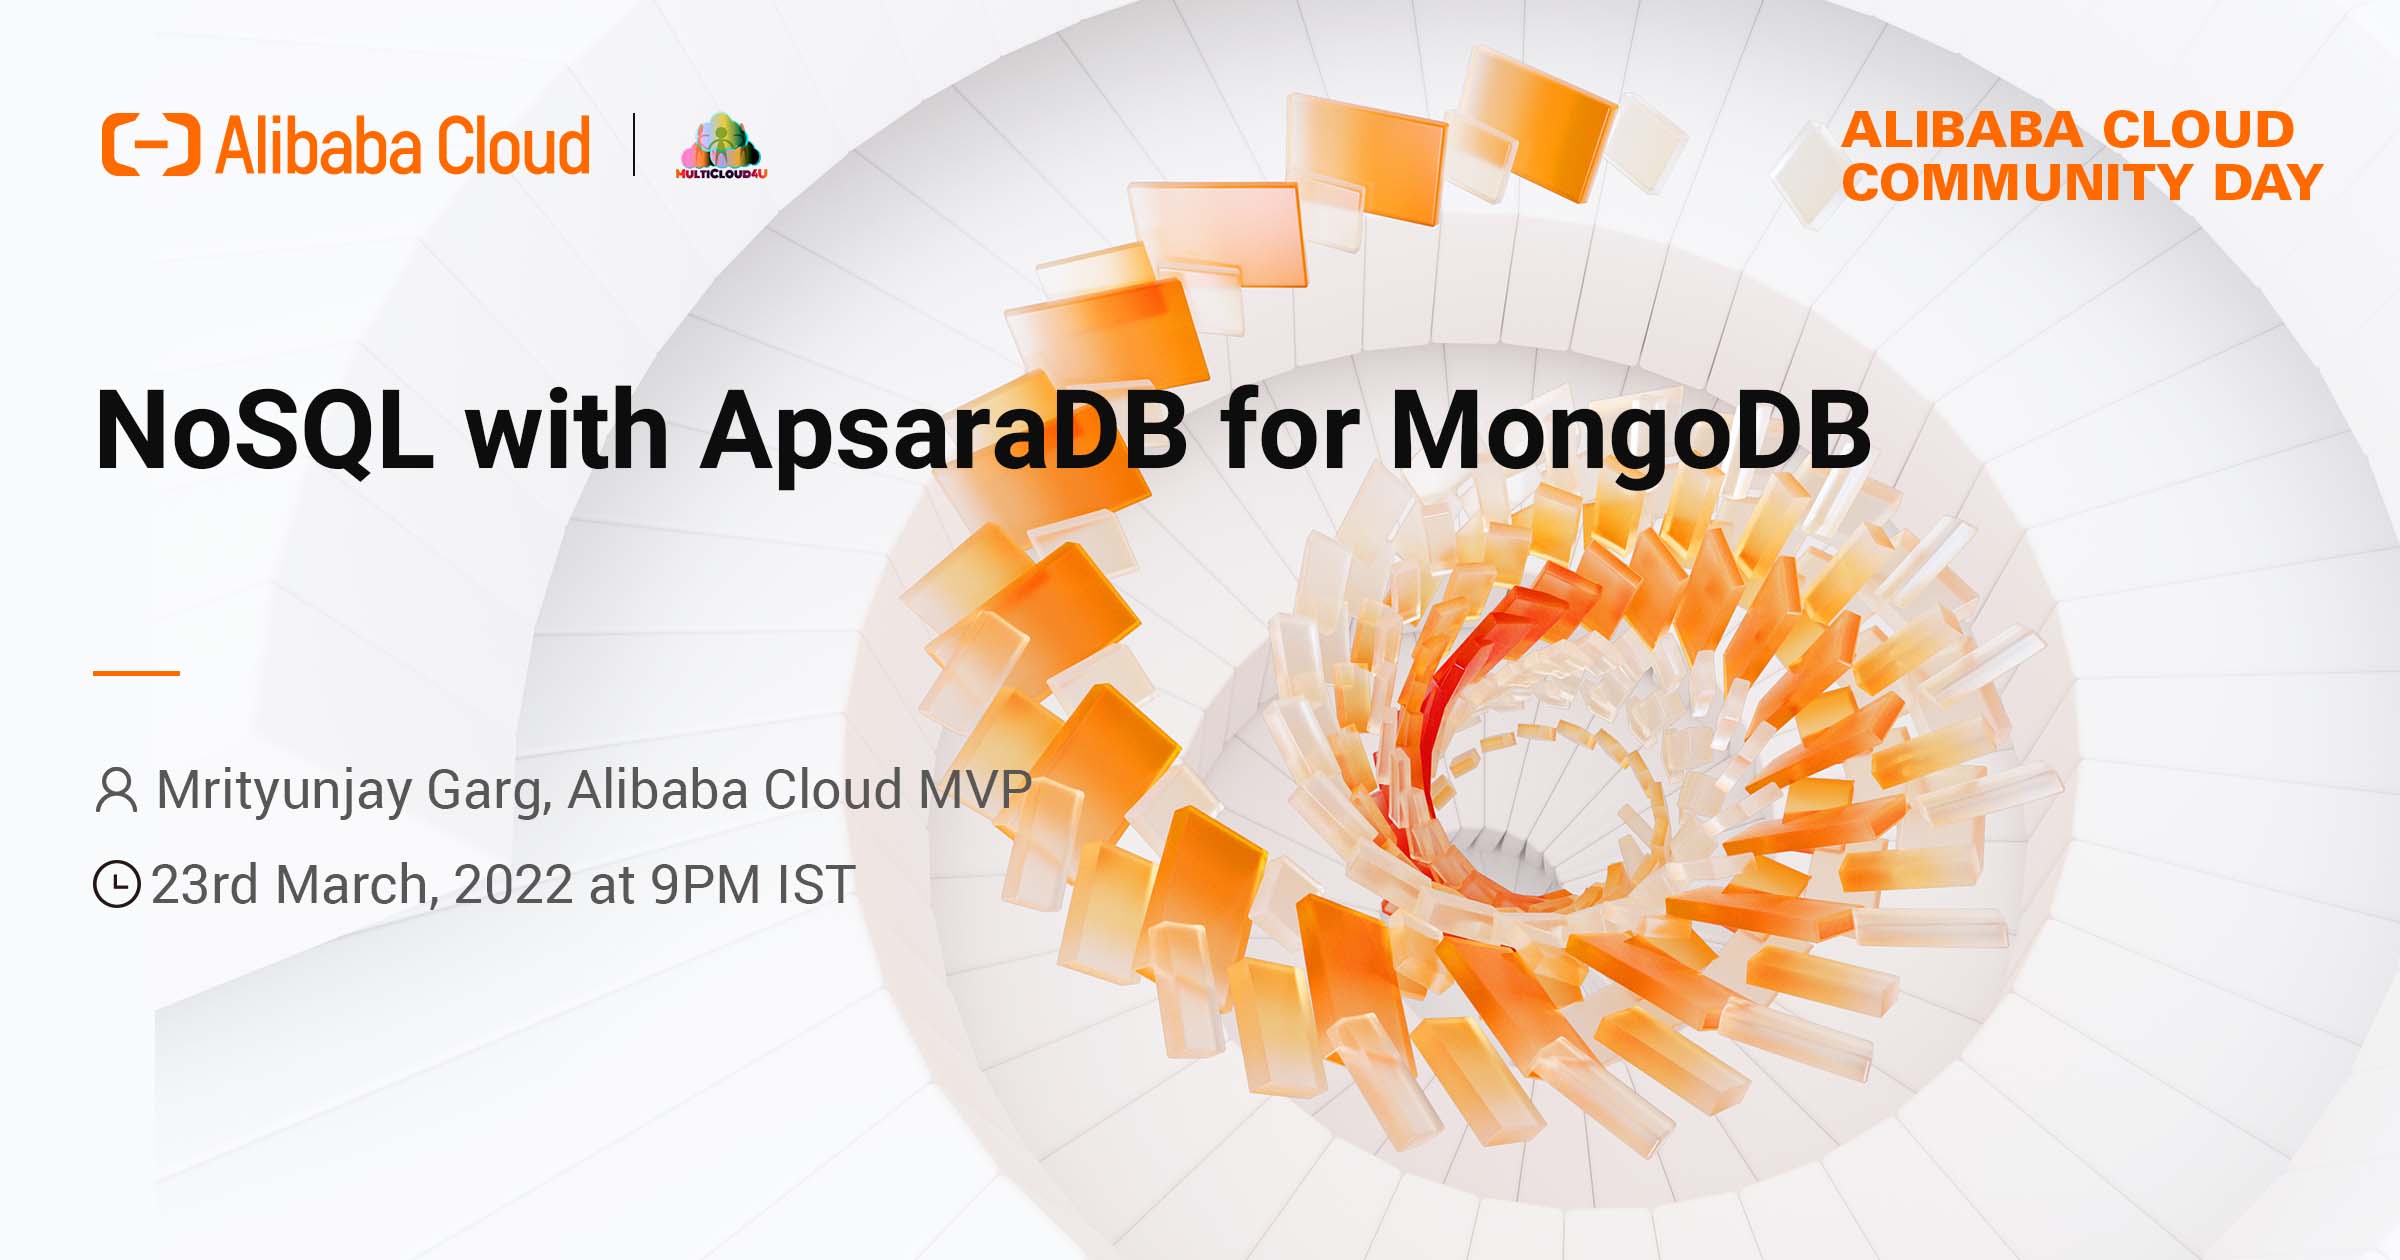 Alibaba Cloud Community Day: No SQL with ApsaraDB for MongoDB